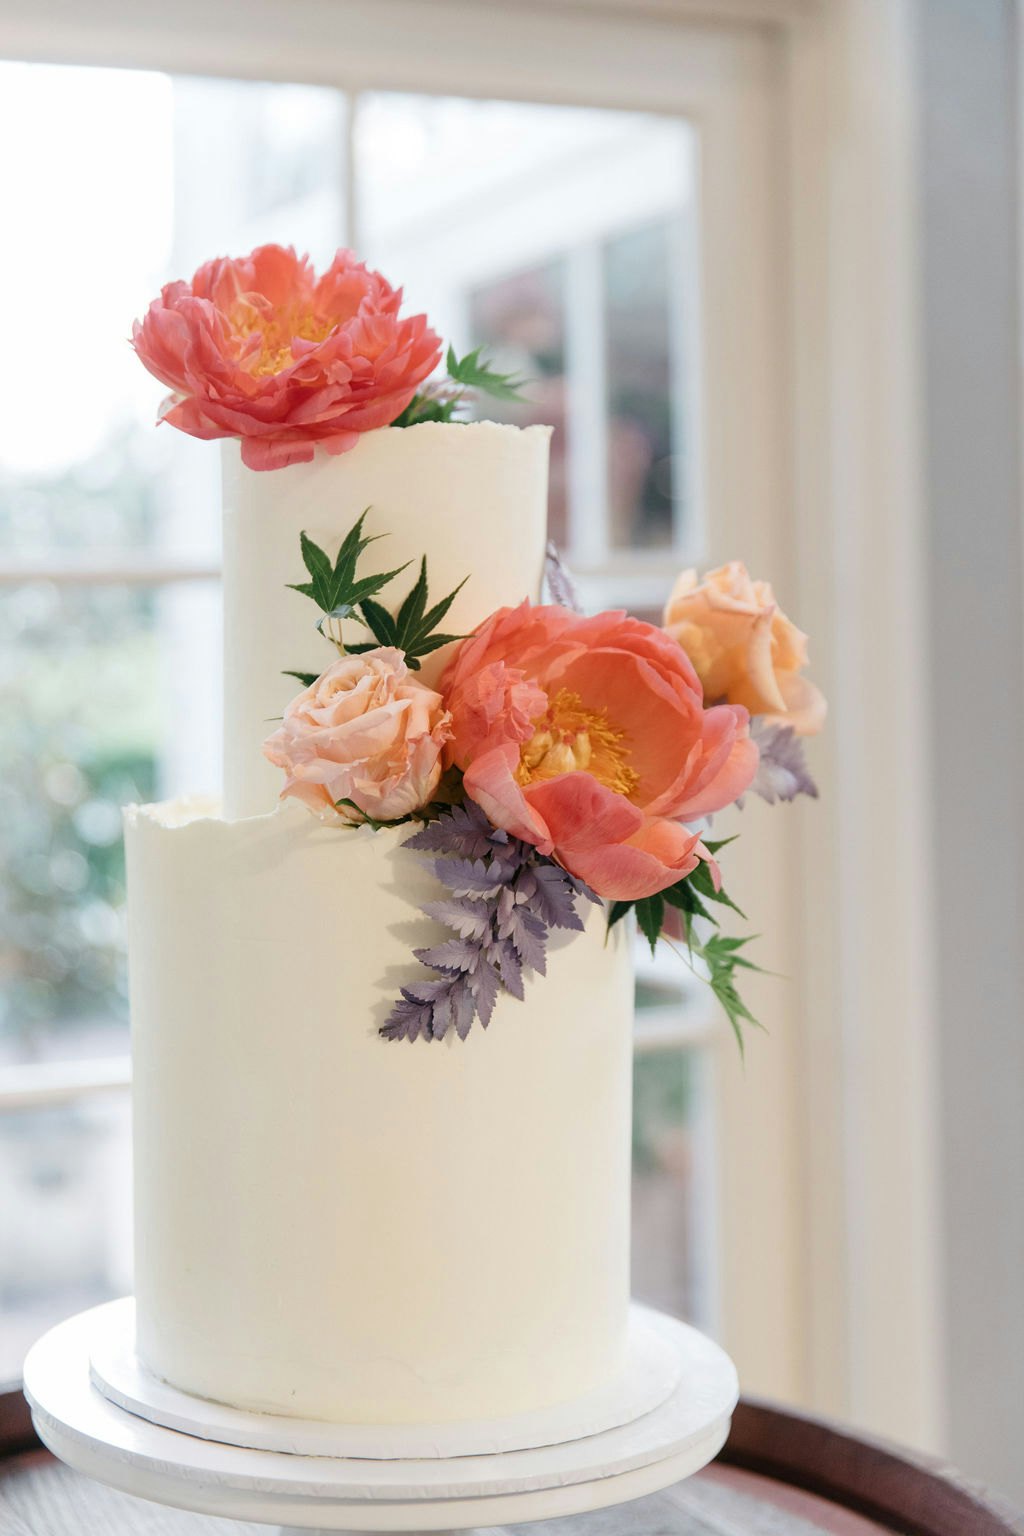 Colourful flowers on wedding cake 